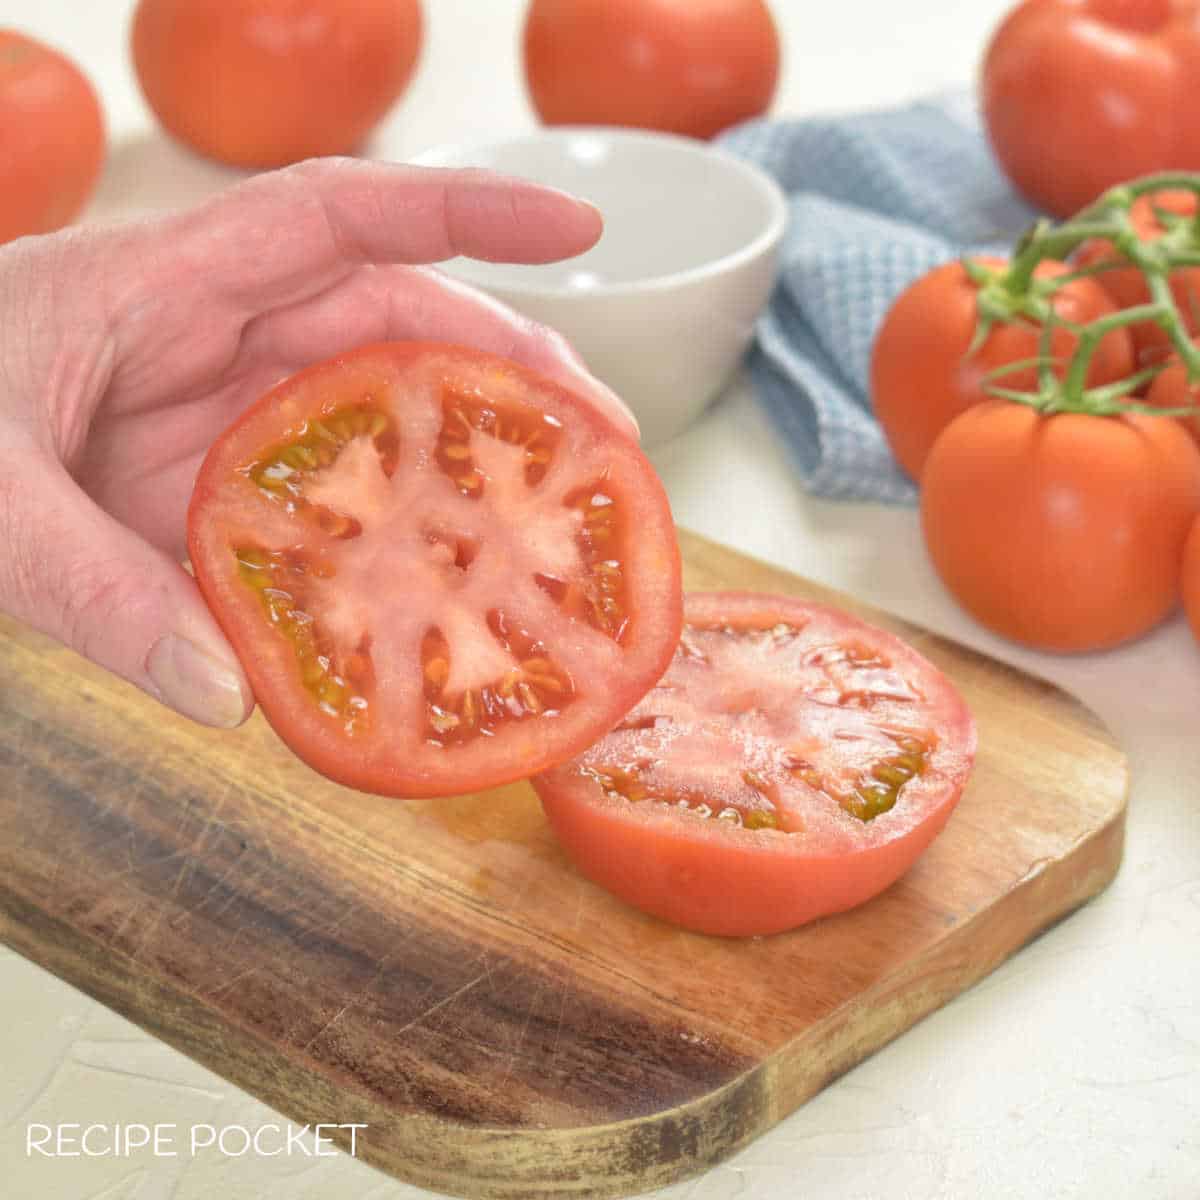 Hand holding half a tomato.